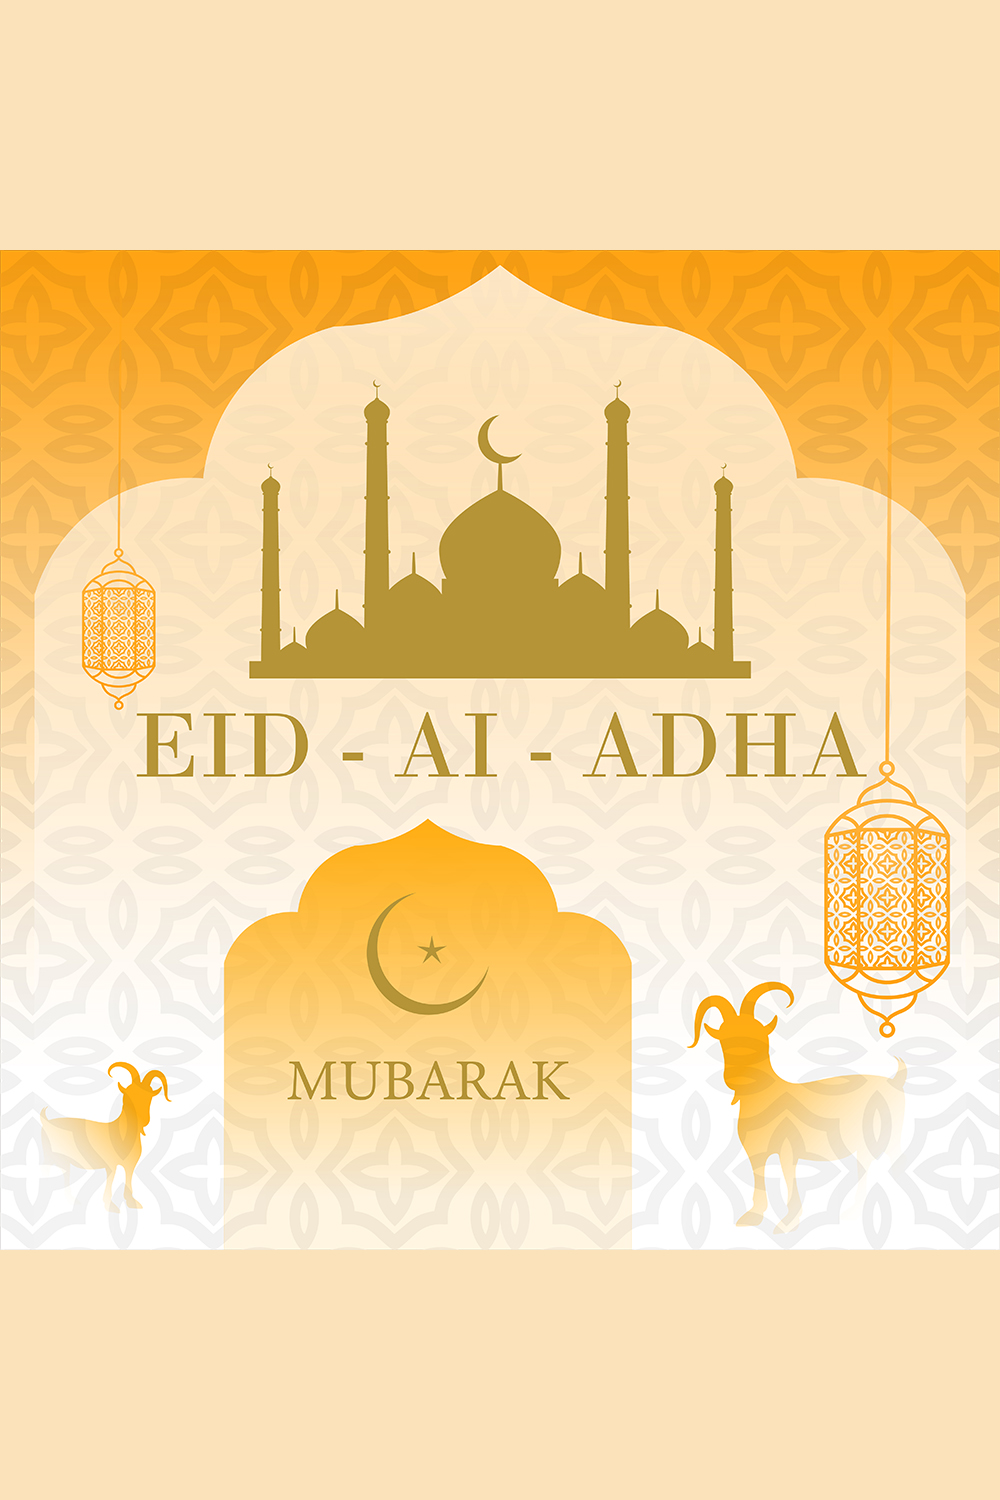 Eid al adha mubarak pinterest preview image.